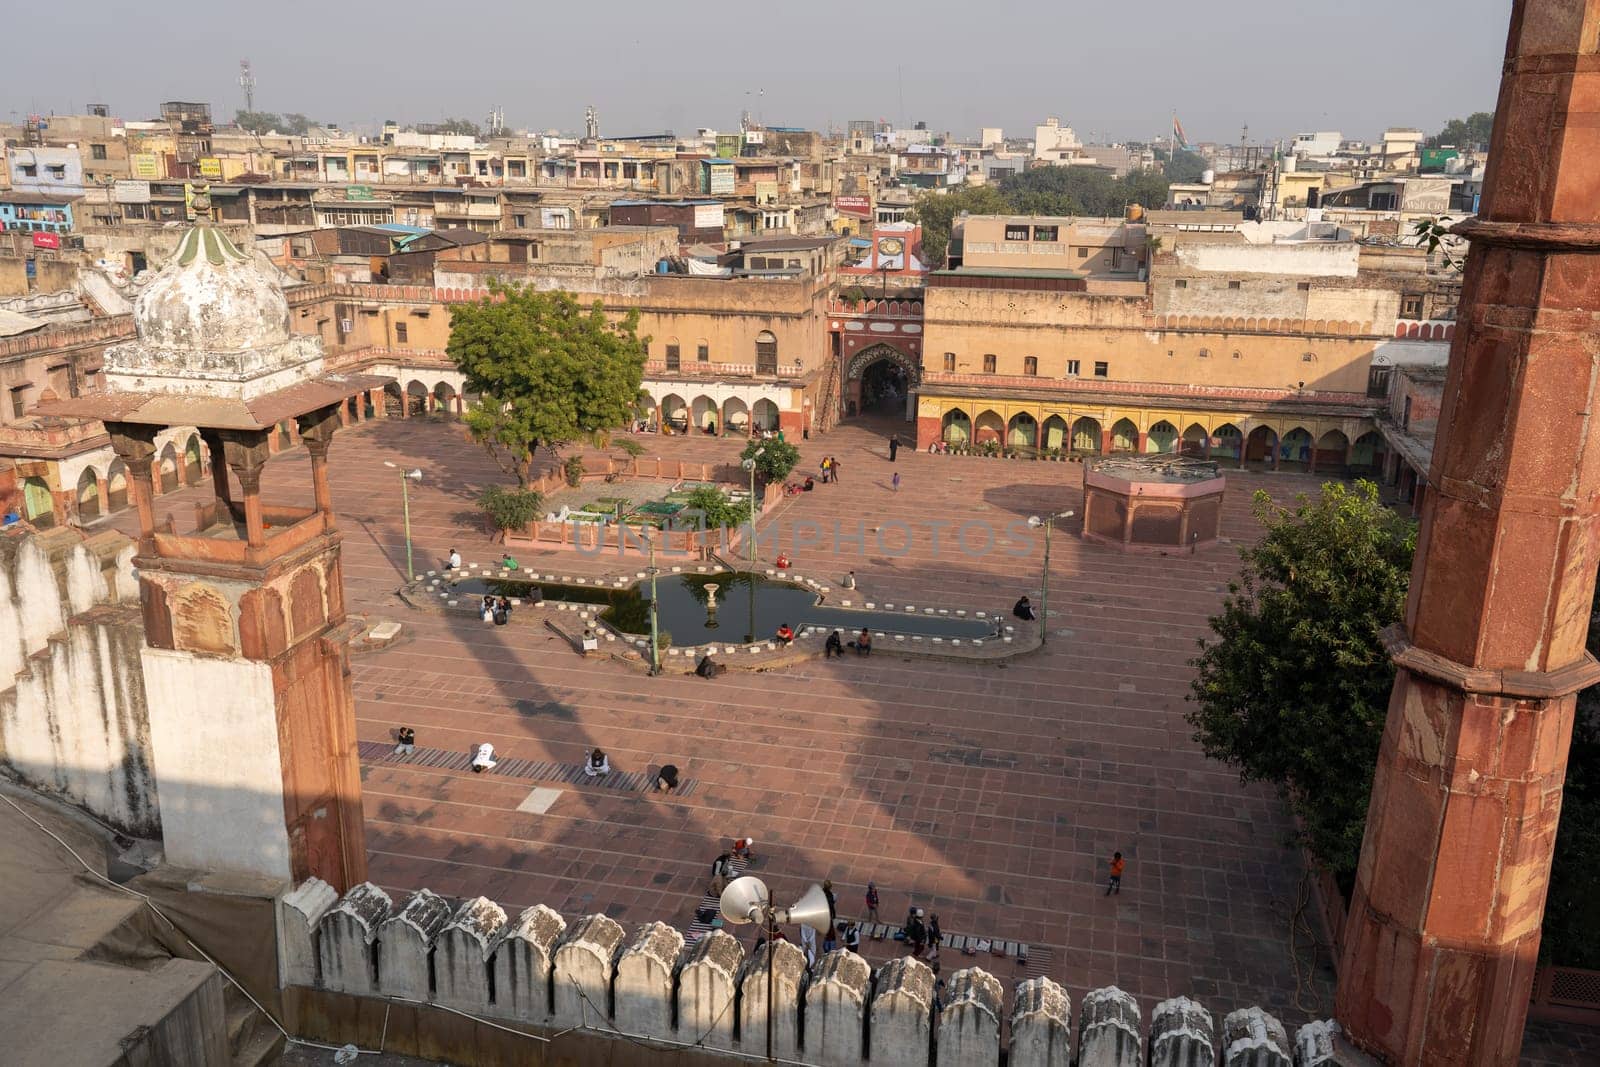 Jama Masjid in Old Delhi, India by oliverfoerstner